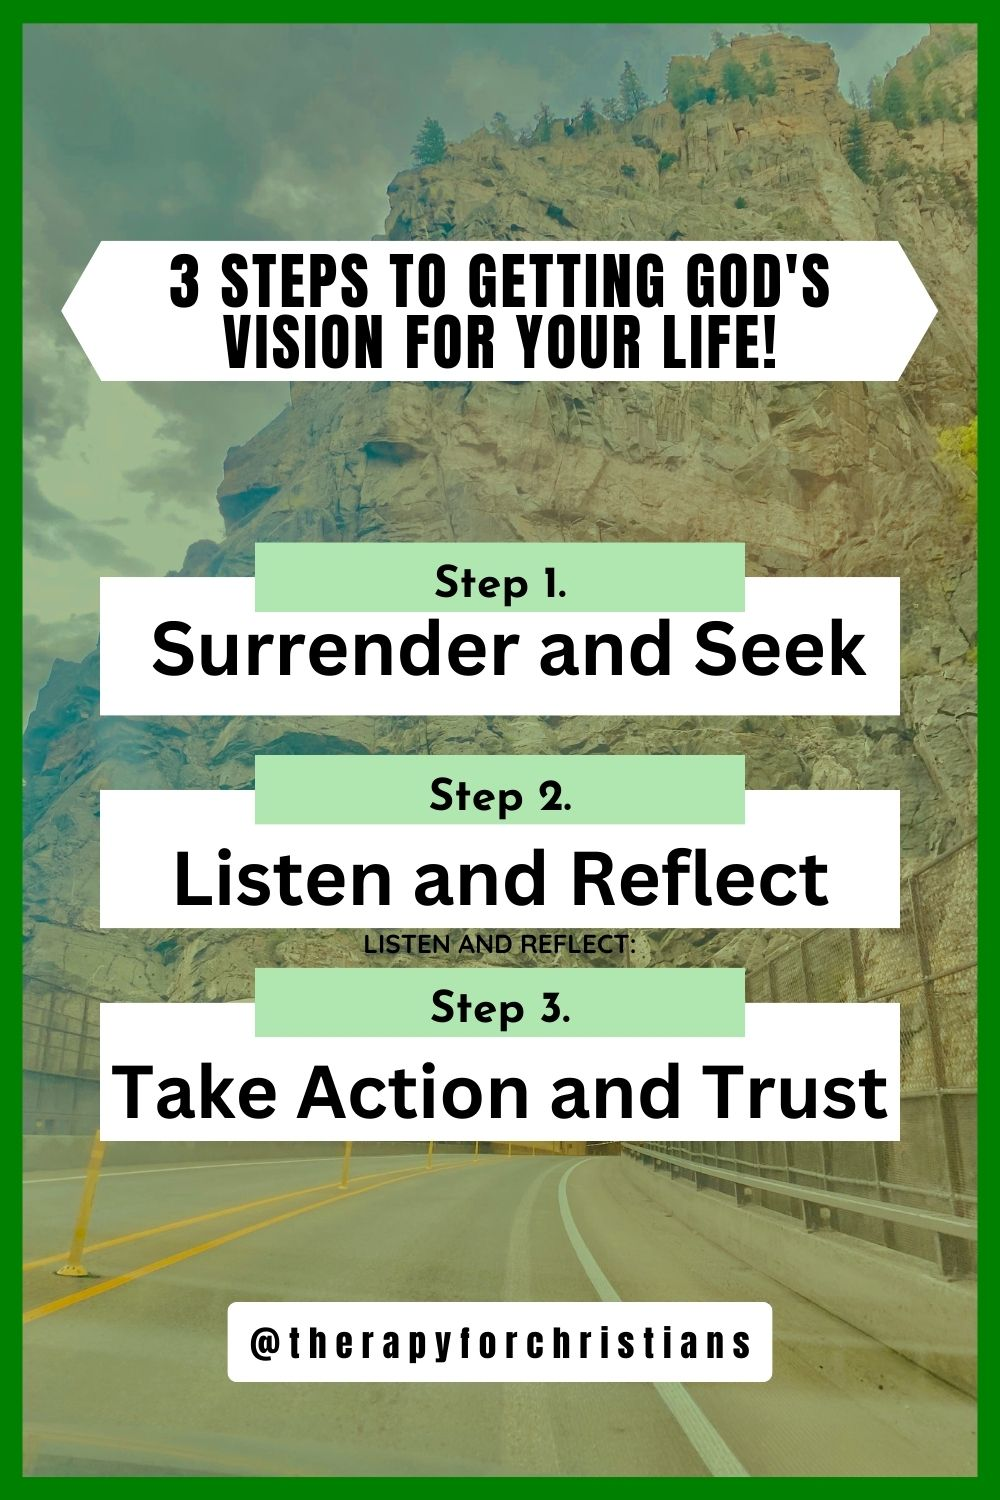 3 steps to get God's vision for your life pinterst image 